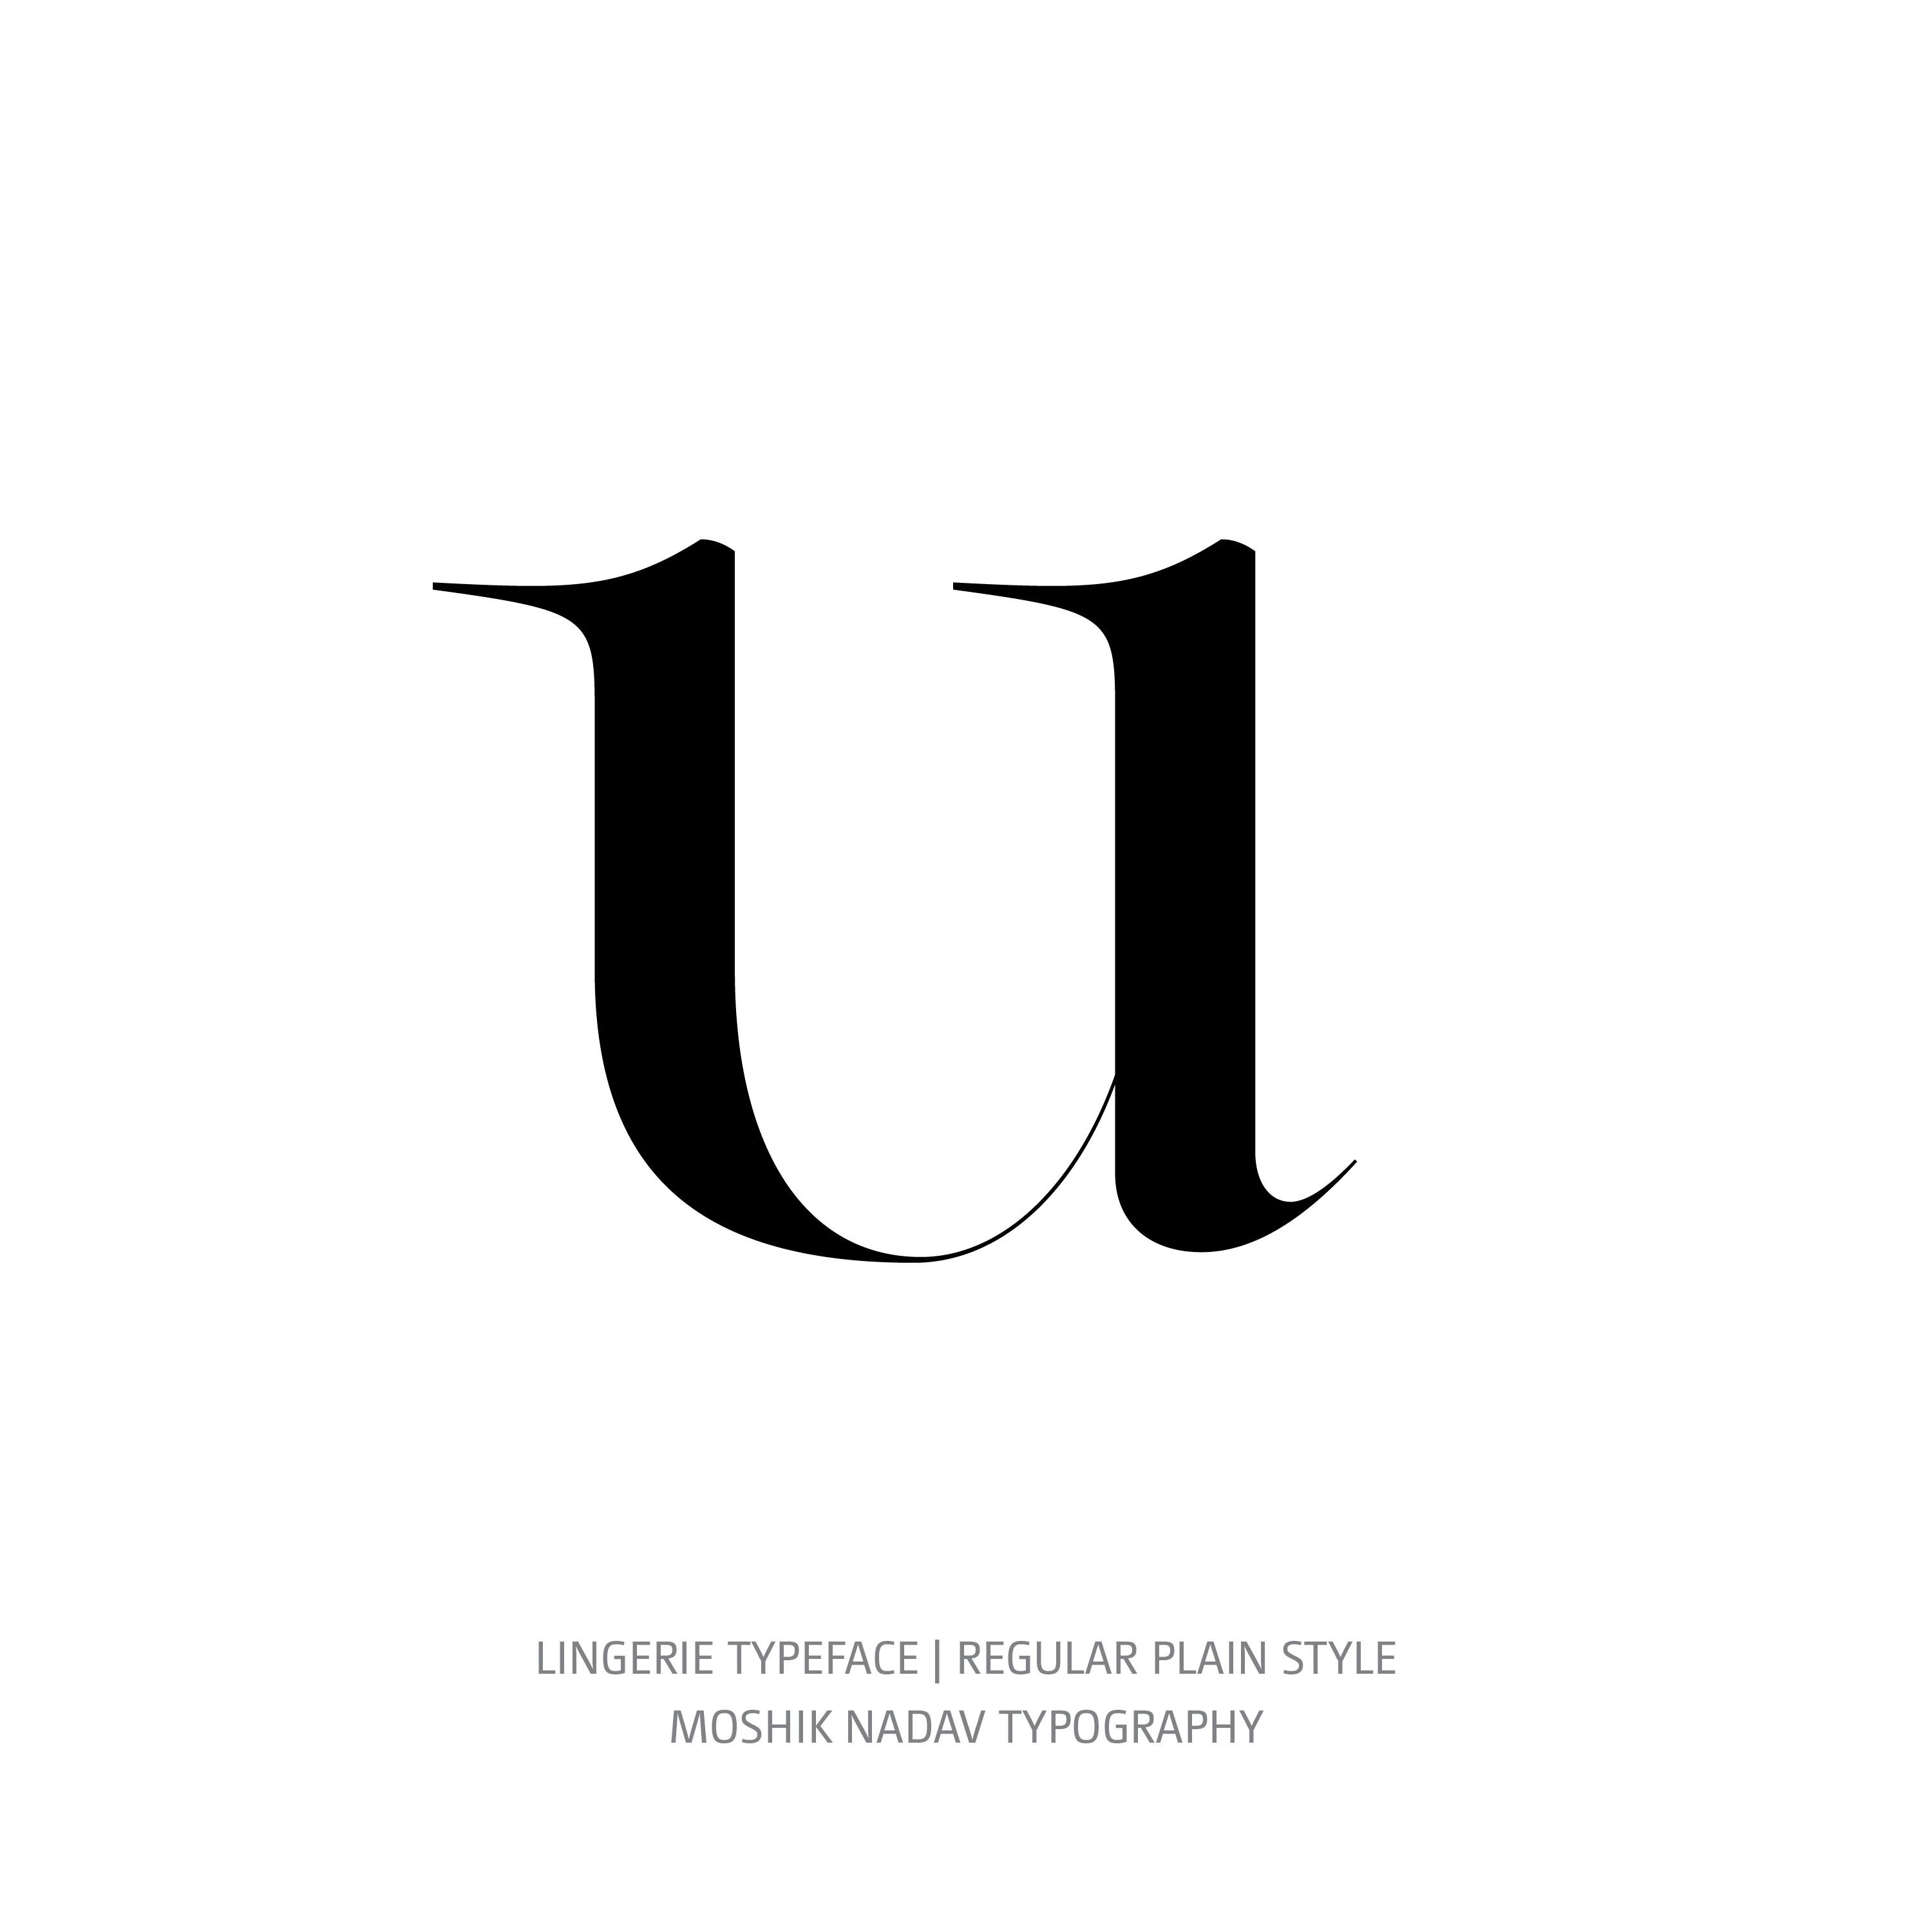 Lingerie Typeface Regular Plain u